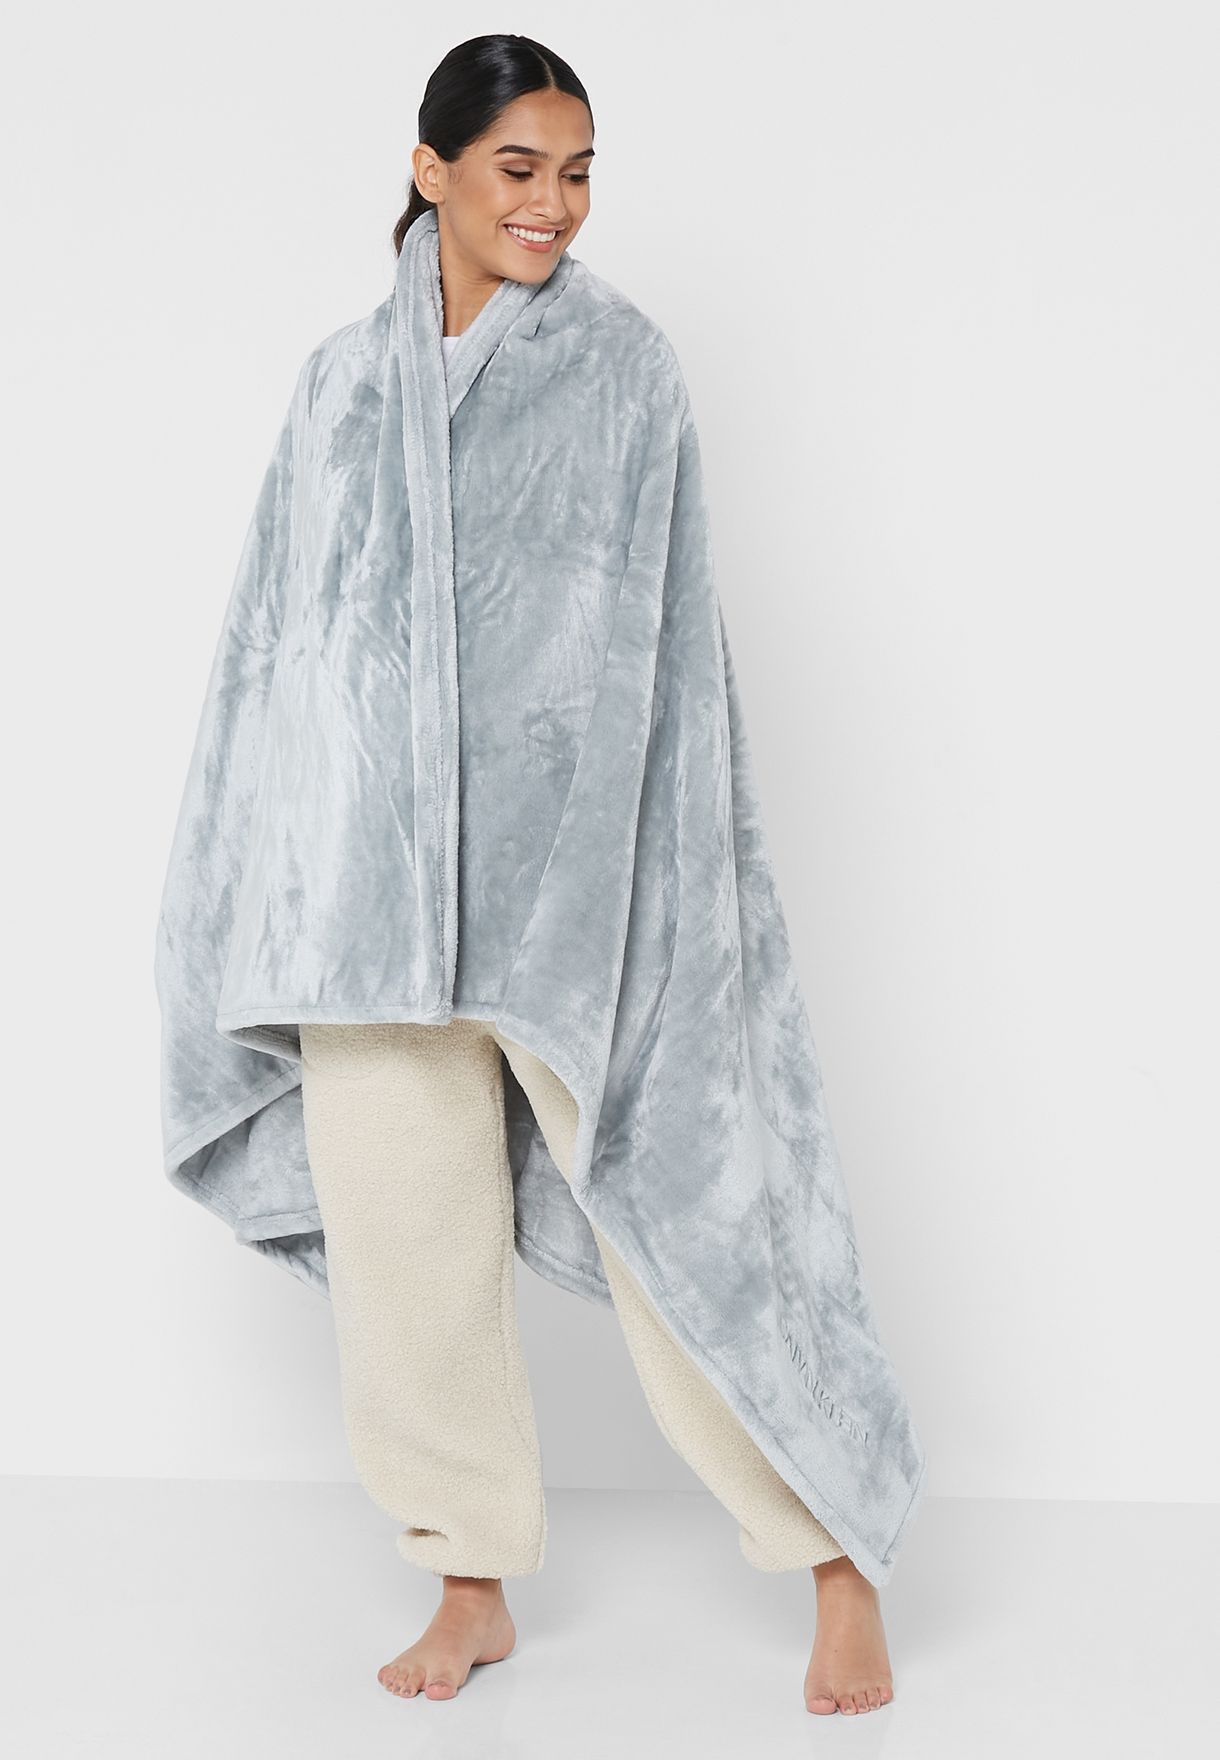 Fleece Blanket 127 x 178cms